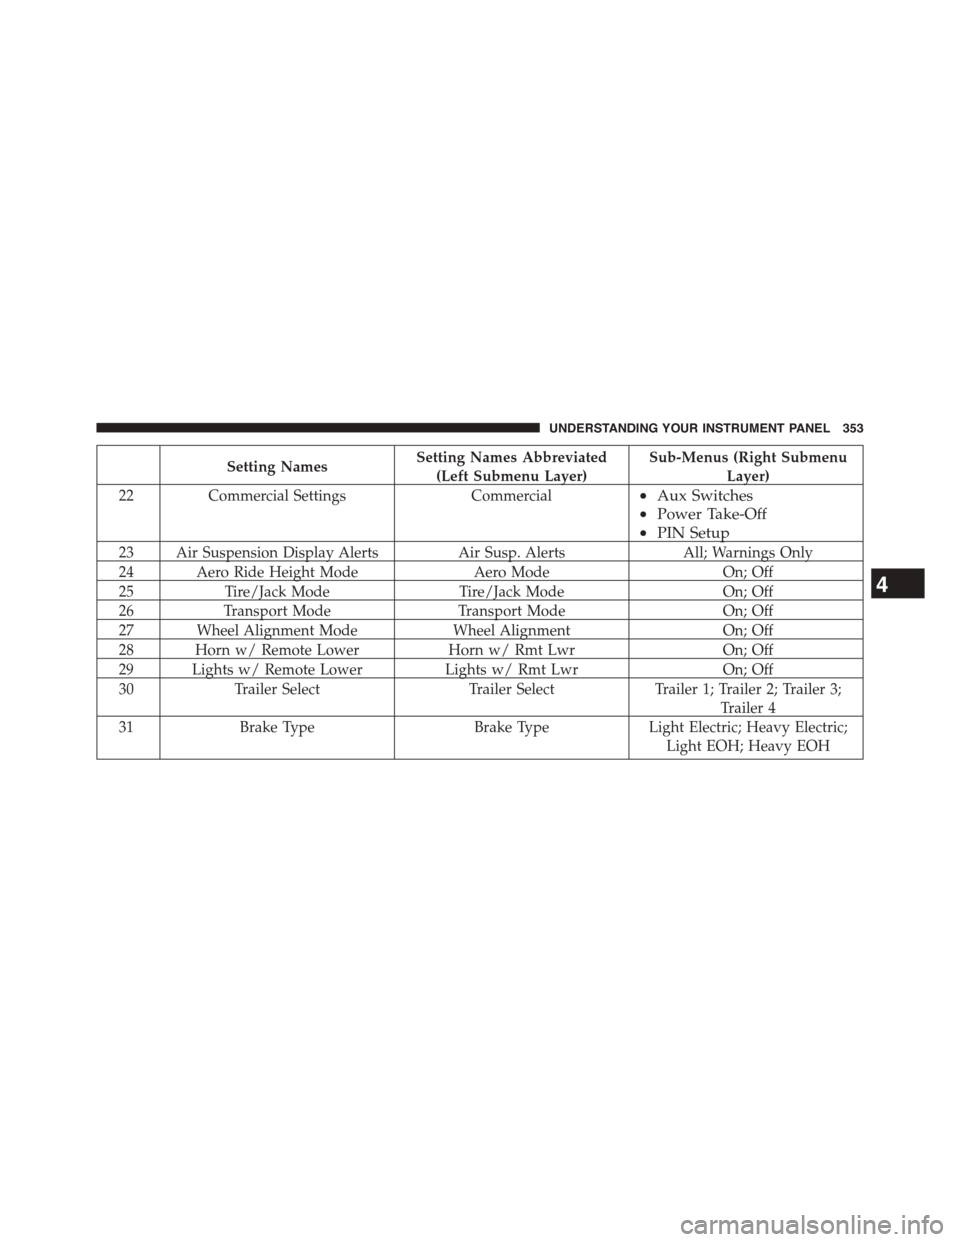 Ram 1500 2015  Owners Manual Setting NamesSetting Names Abbreviated
(Left Submenu Layer)
Sub-Menus (Right Submenu
Layer)
22Commercial SettingsCommercial•Aux Switches
•Power Take-Off
•PIN Setup
23 Air Suspension Display Aler